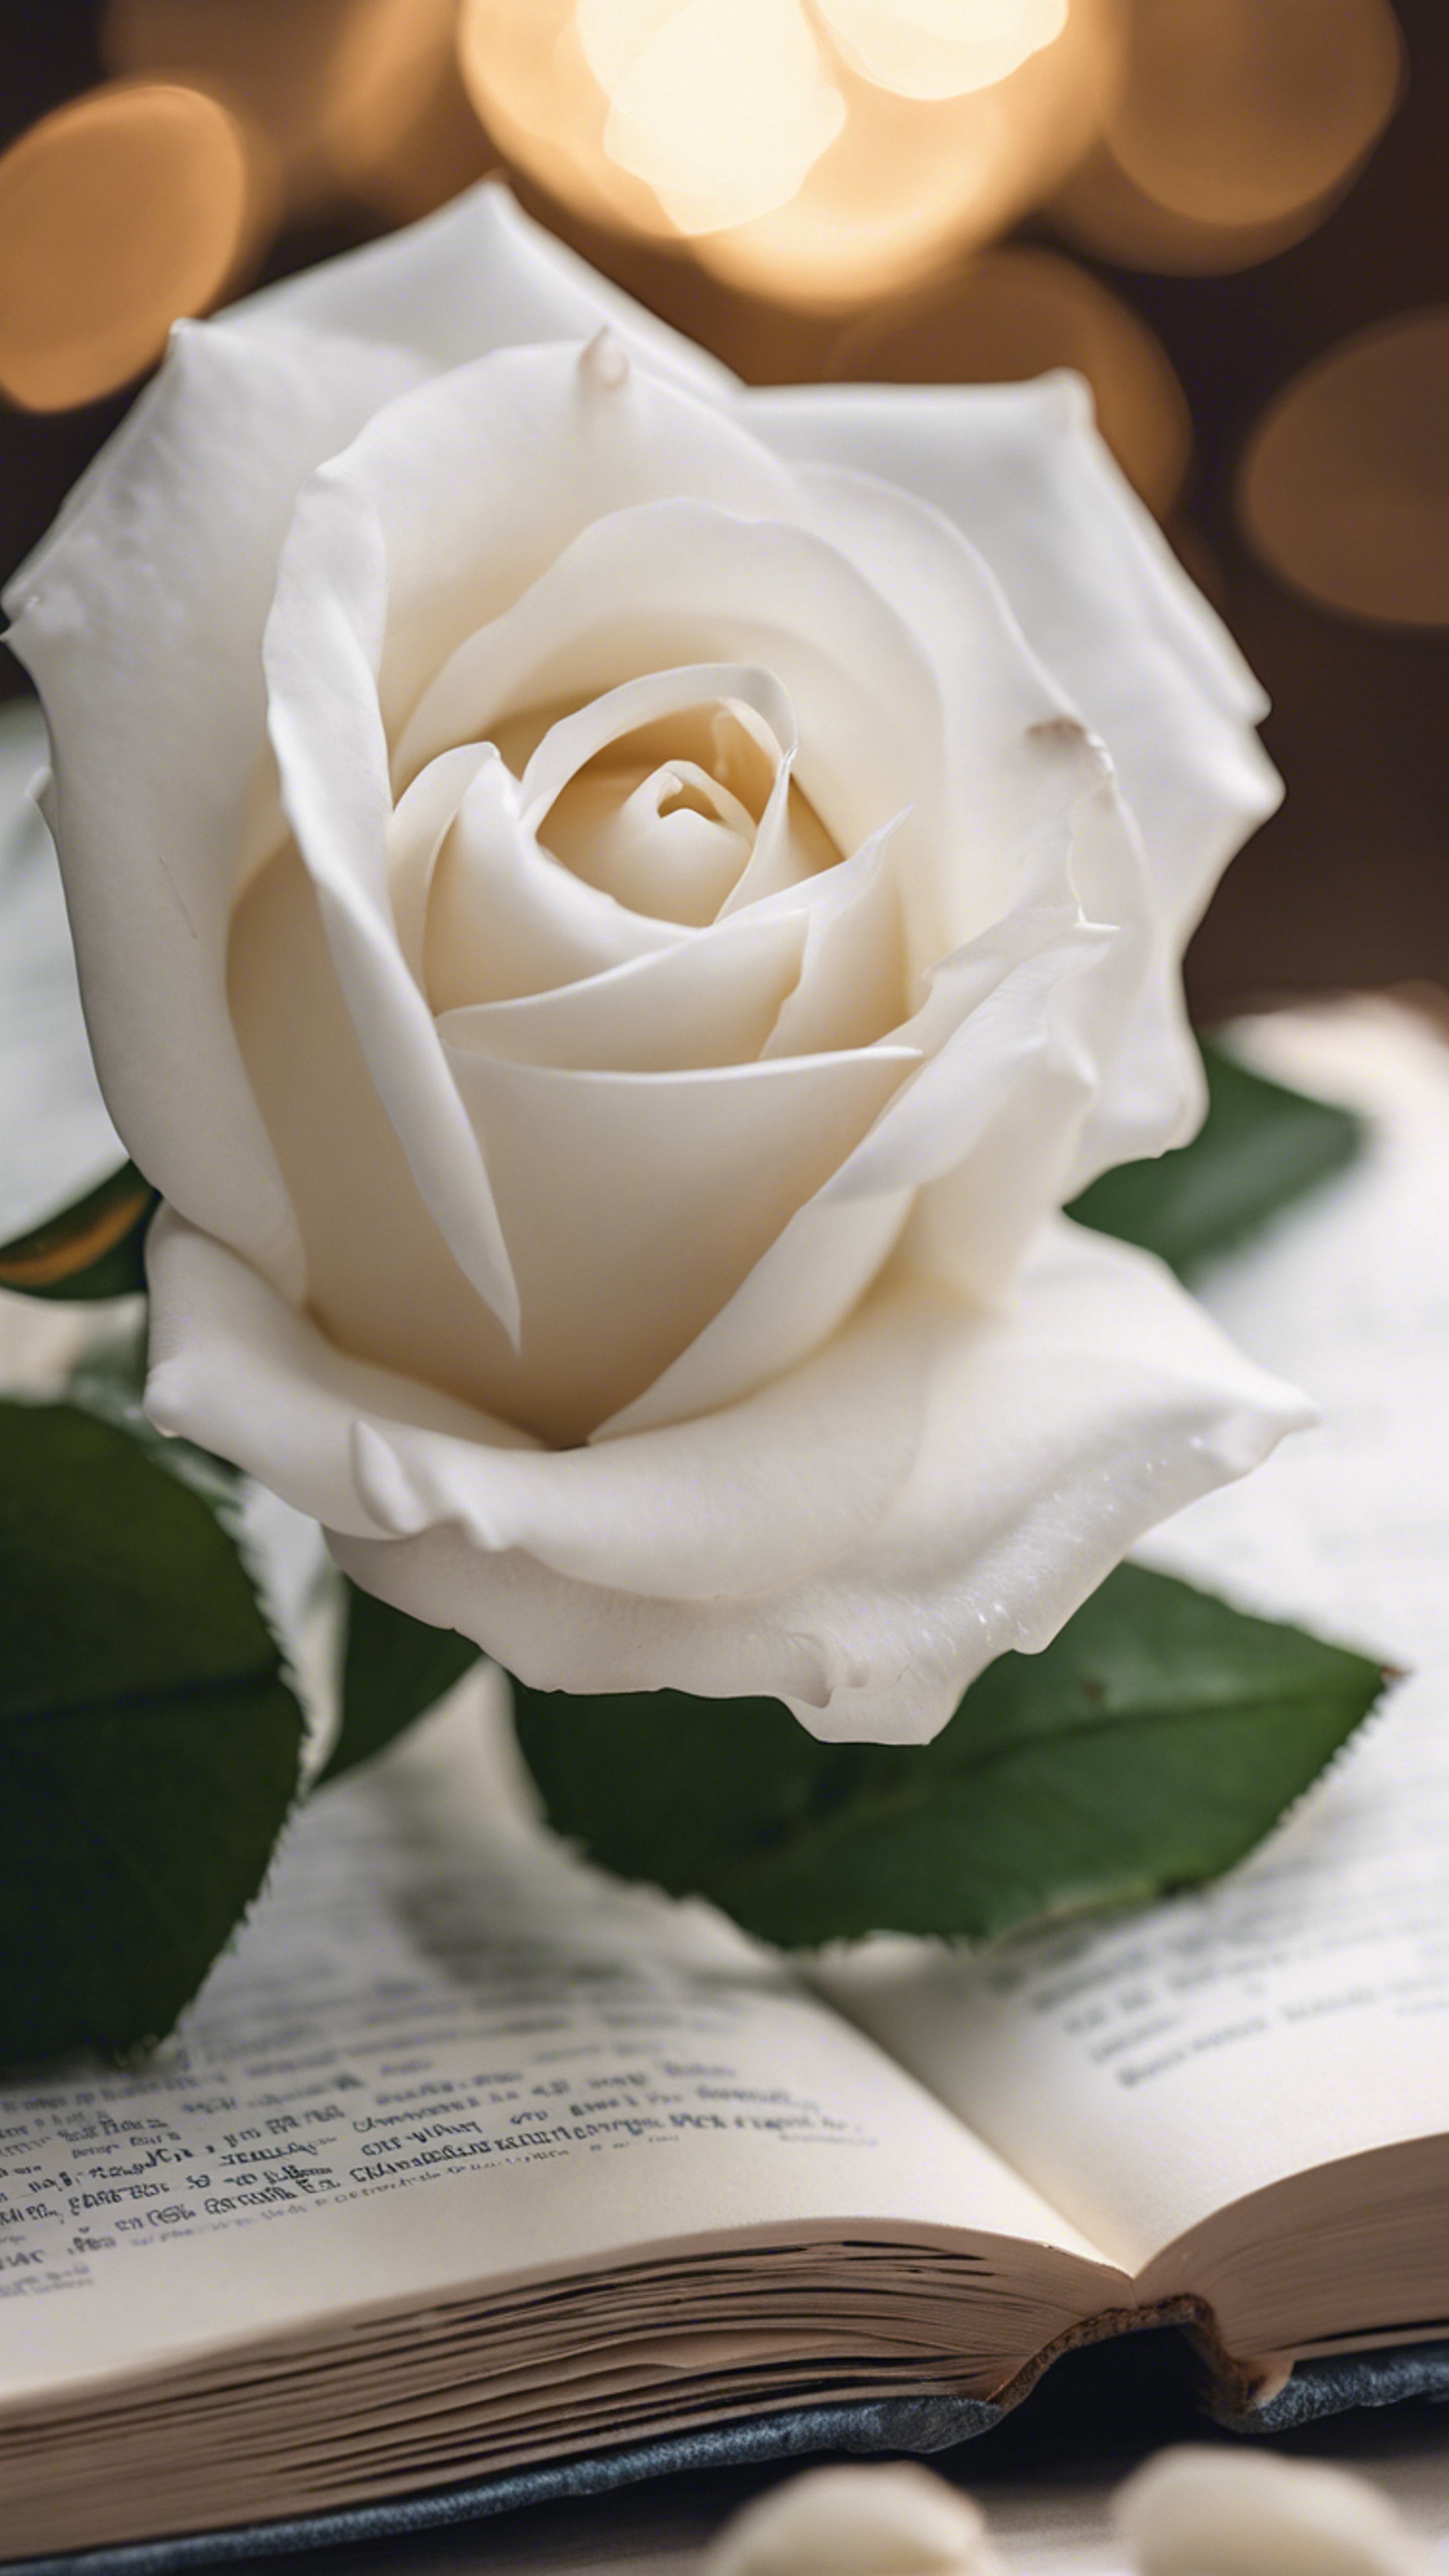 A serene white rose perched on an open hardcover book. Tapéta[5eeaaa5d95634df1b3fb]